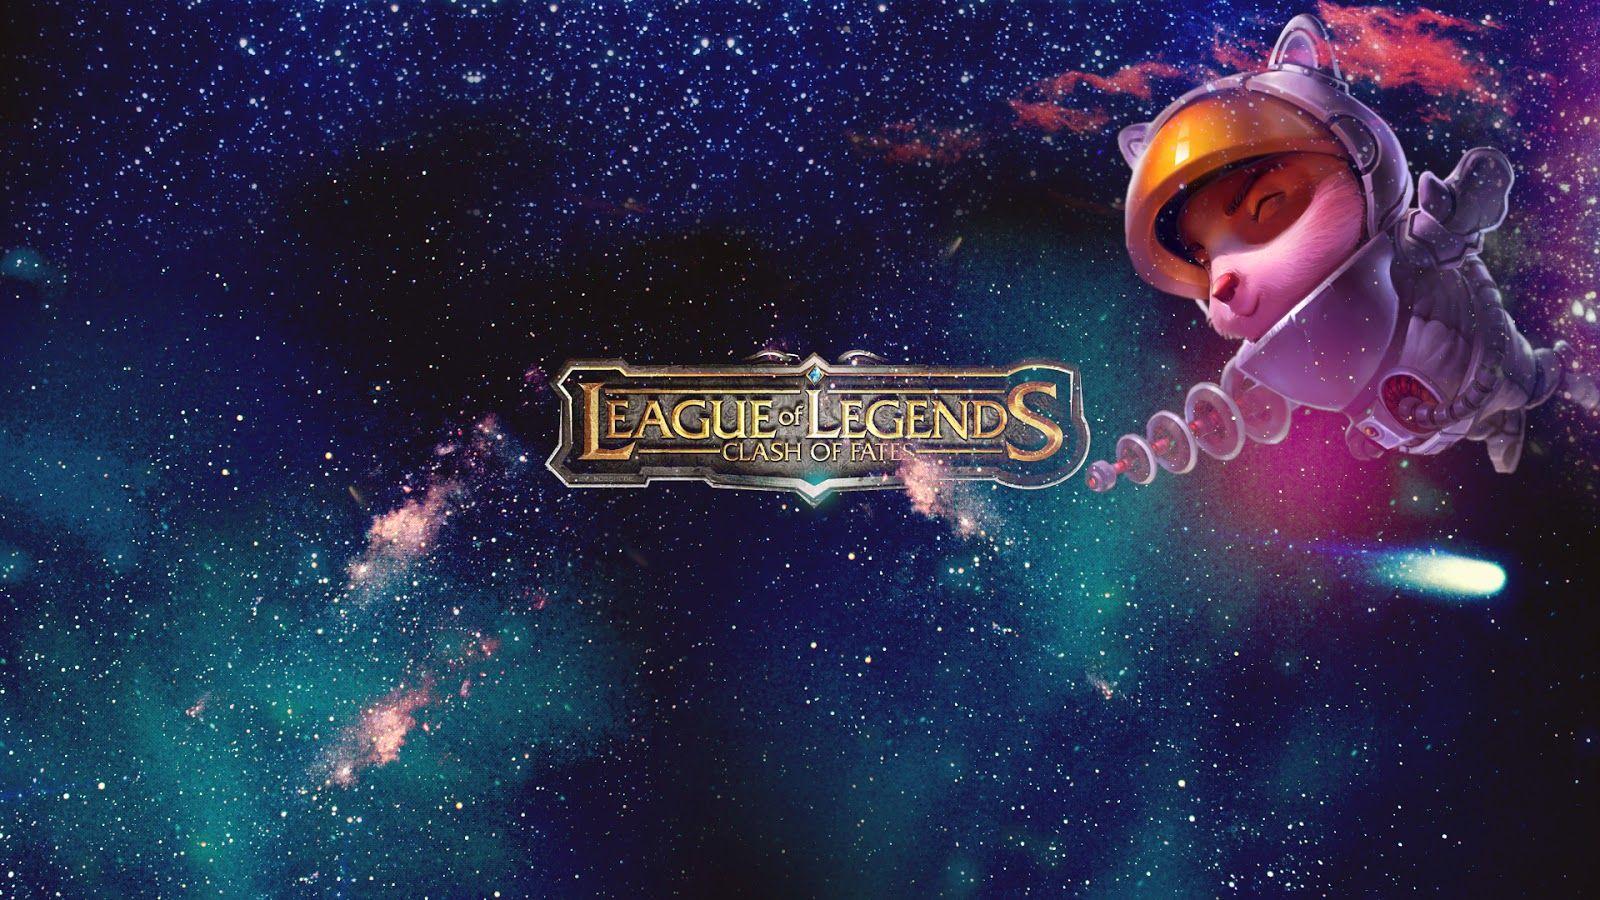 League Of Legends Teemo Wallpaper Full HD Sdeerwallpaper